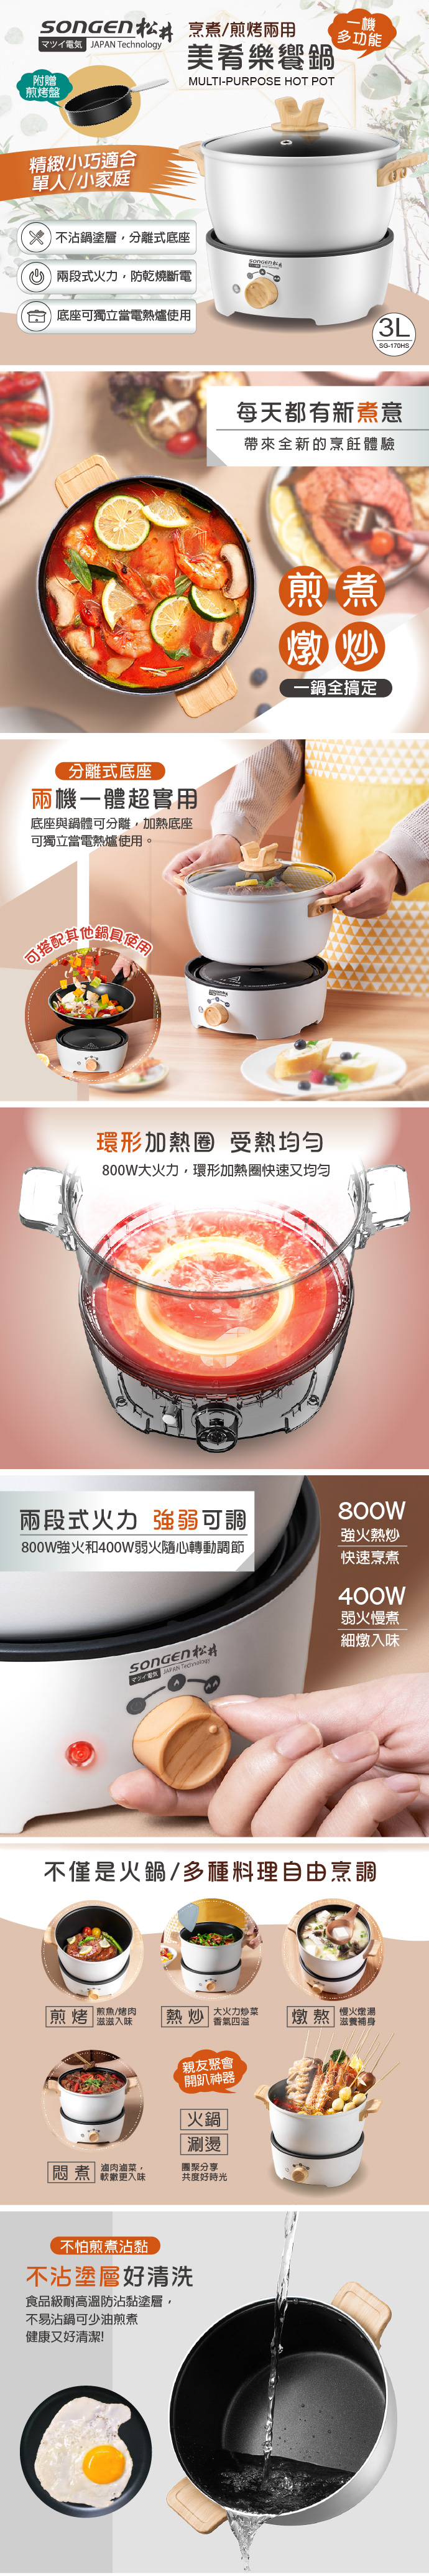 【SONGEN松井】烹煮煎烤兩用美肴樂饗鍋/電火鍋/料理鍋/電烤爐(SG-170